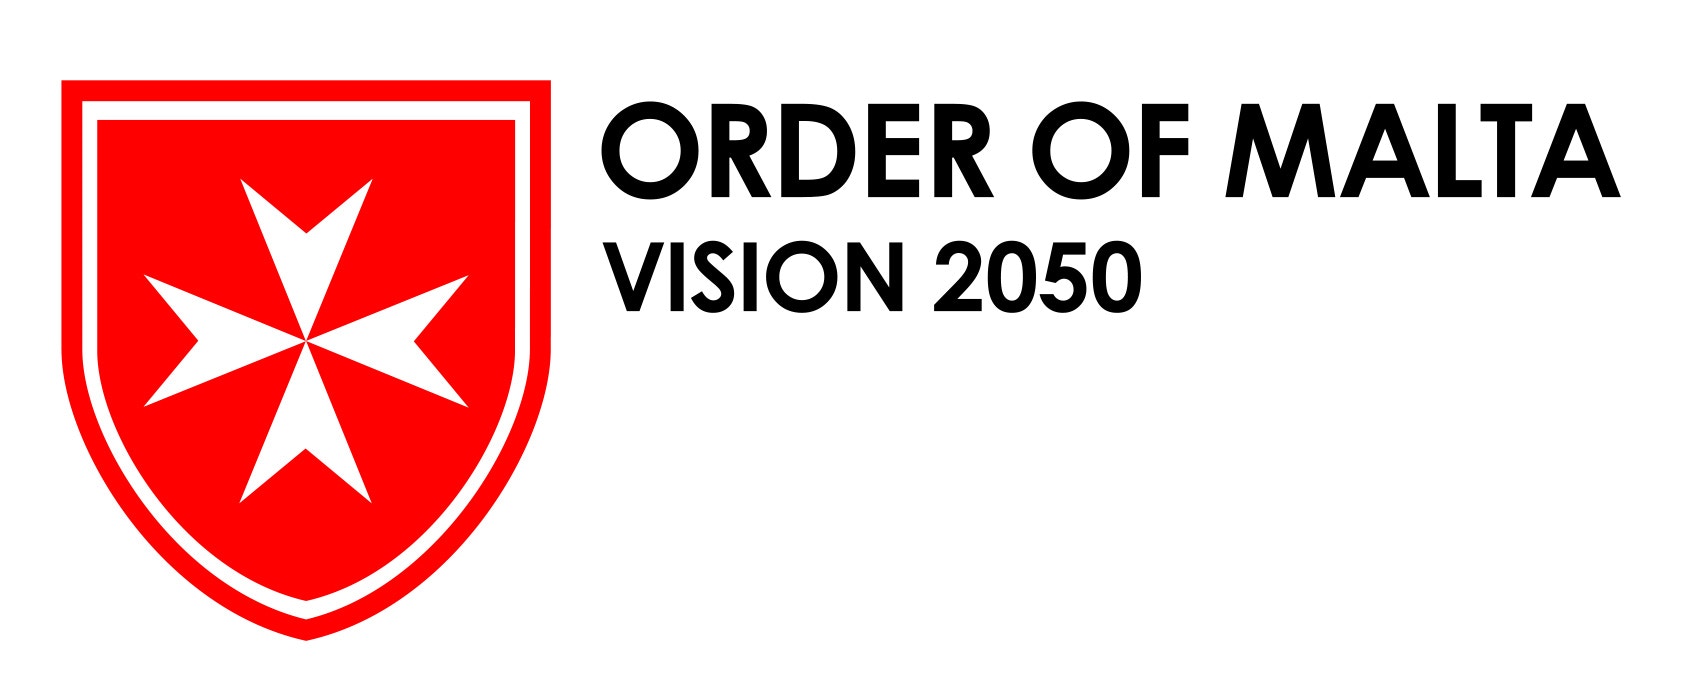 Order of Malta Vision 2050